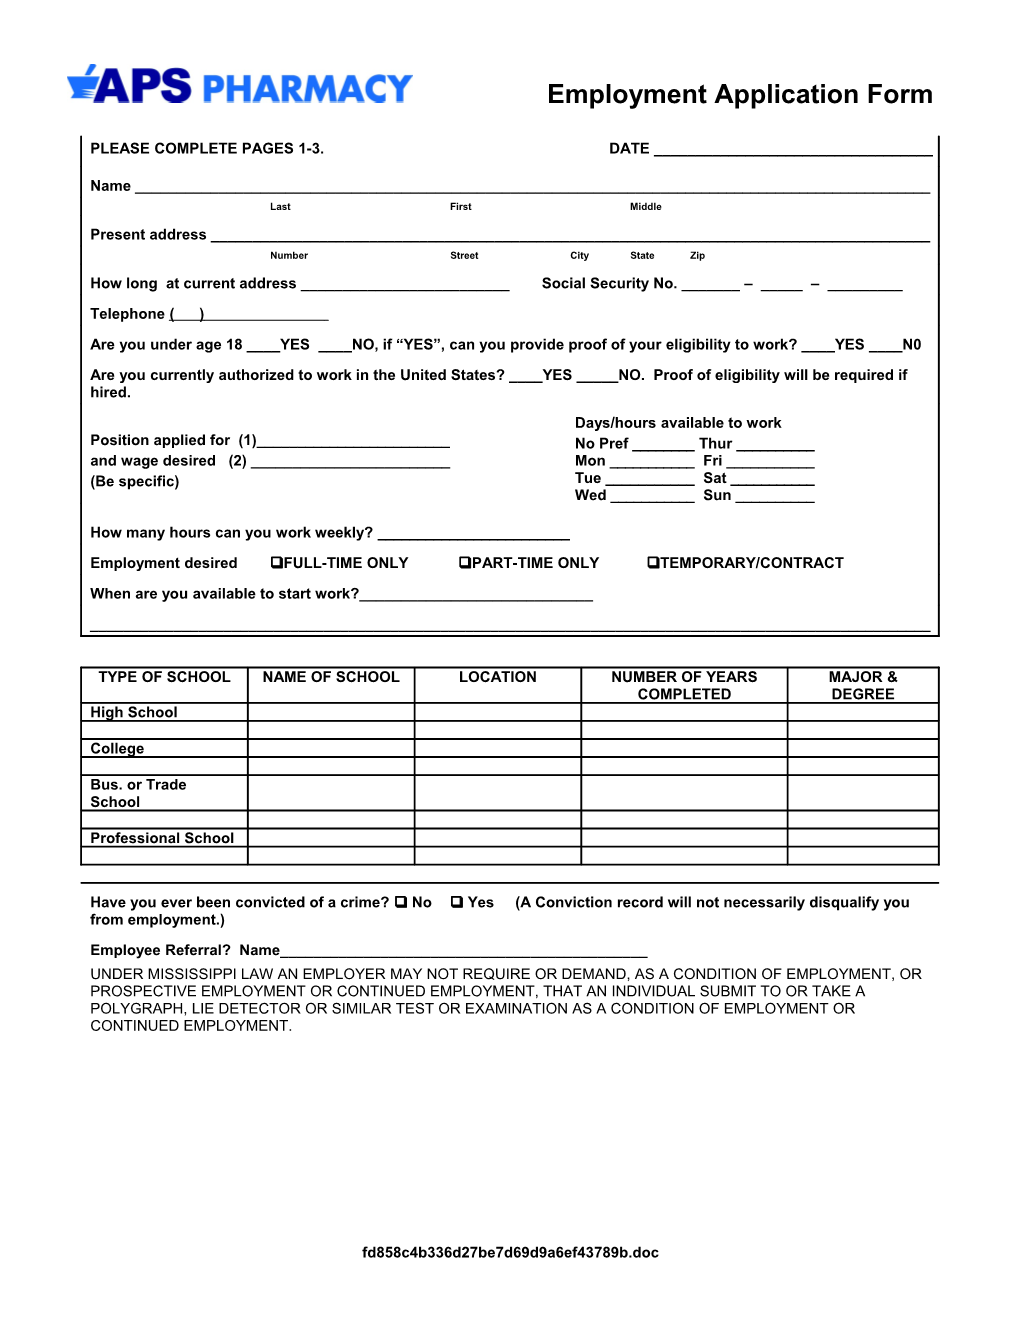 Employment Application Form s10